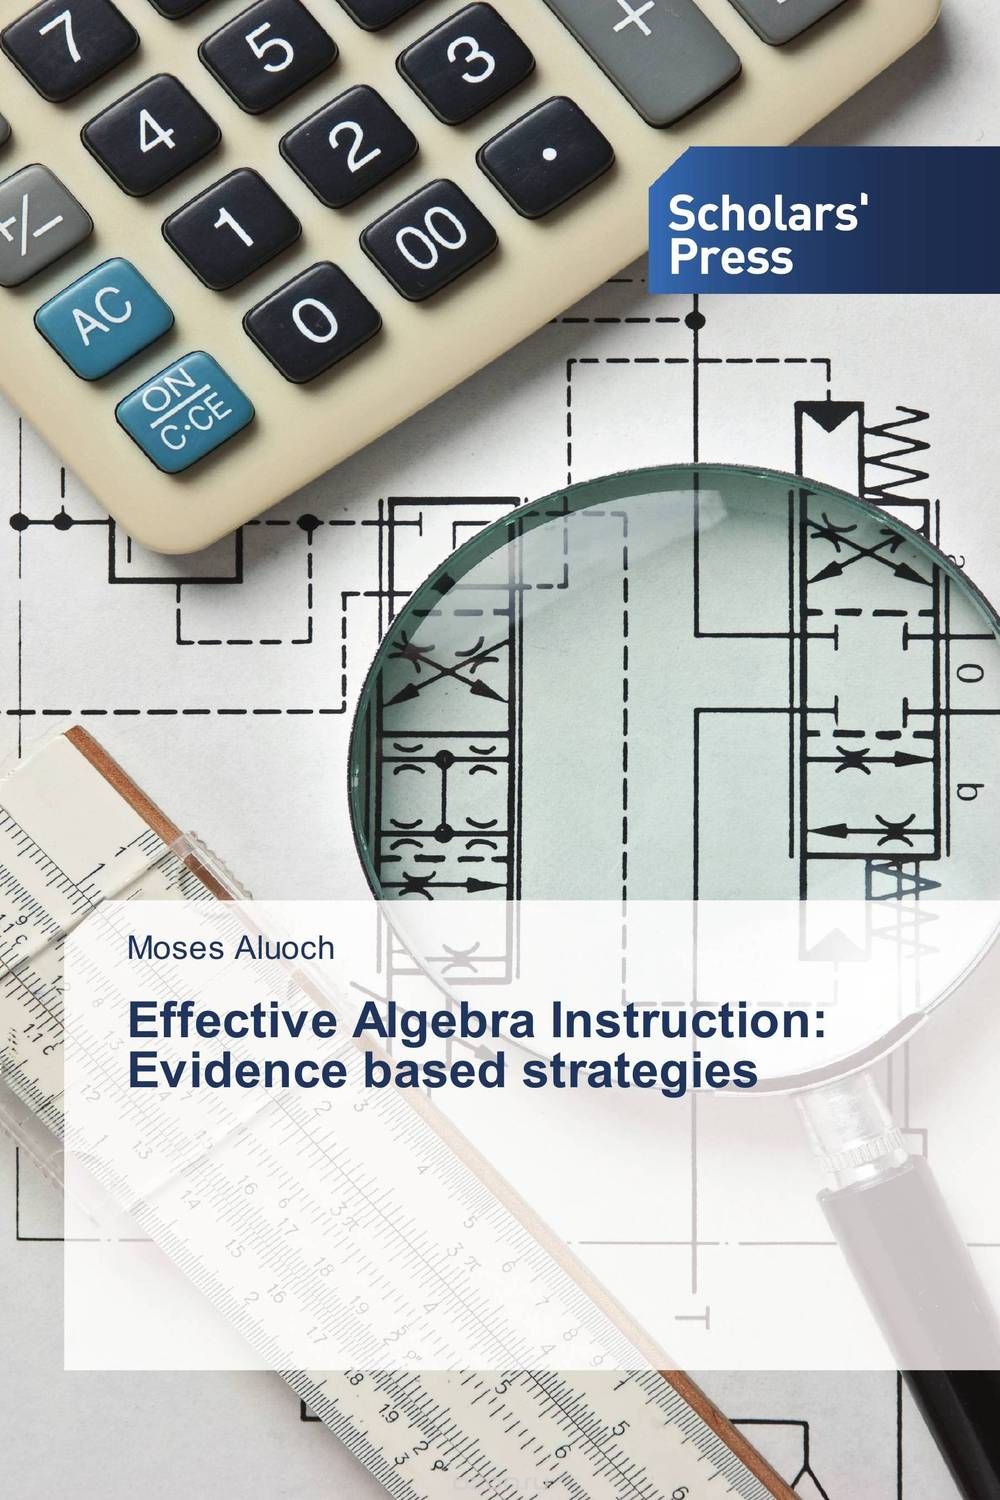 Скачать книгу "Effective Algebra Instruction: Evidence based strategies"